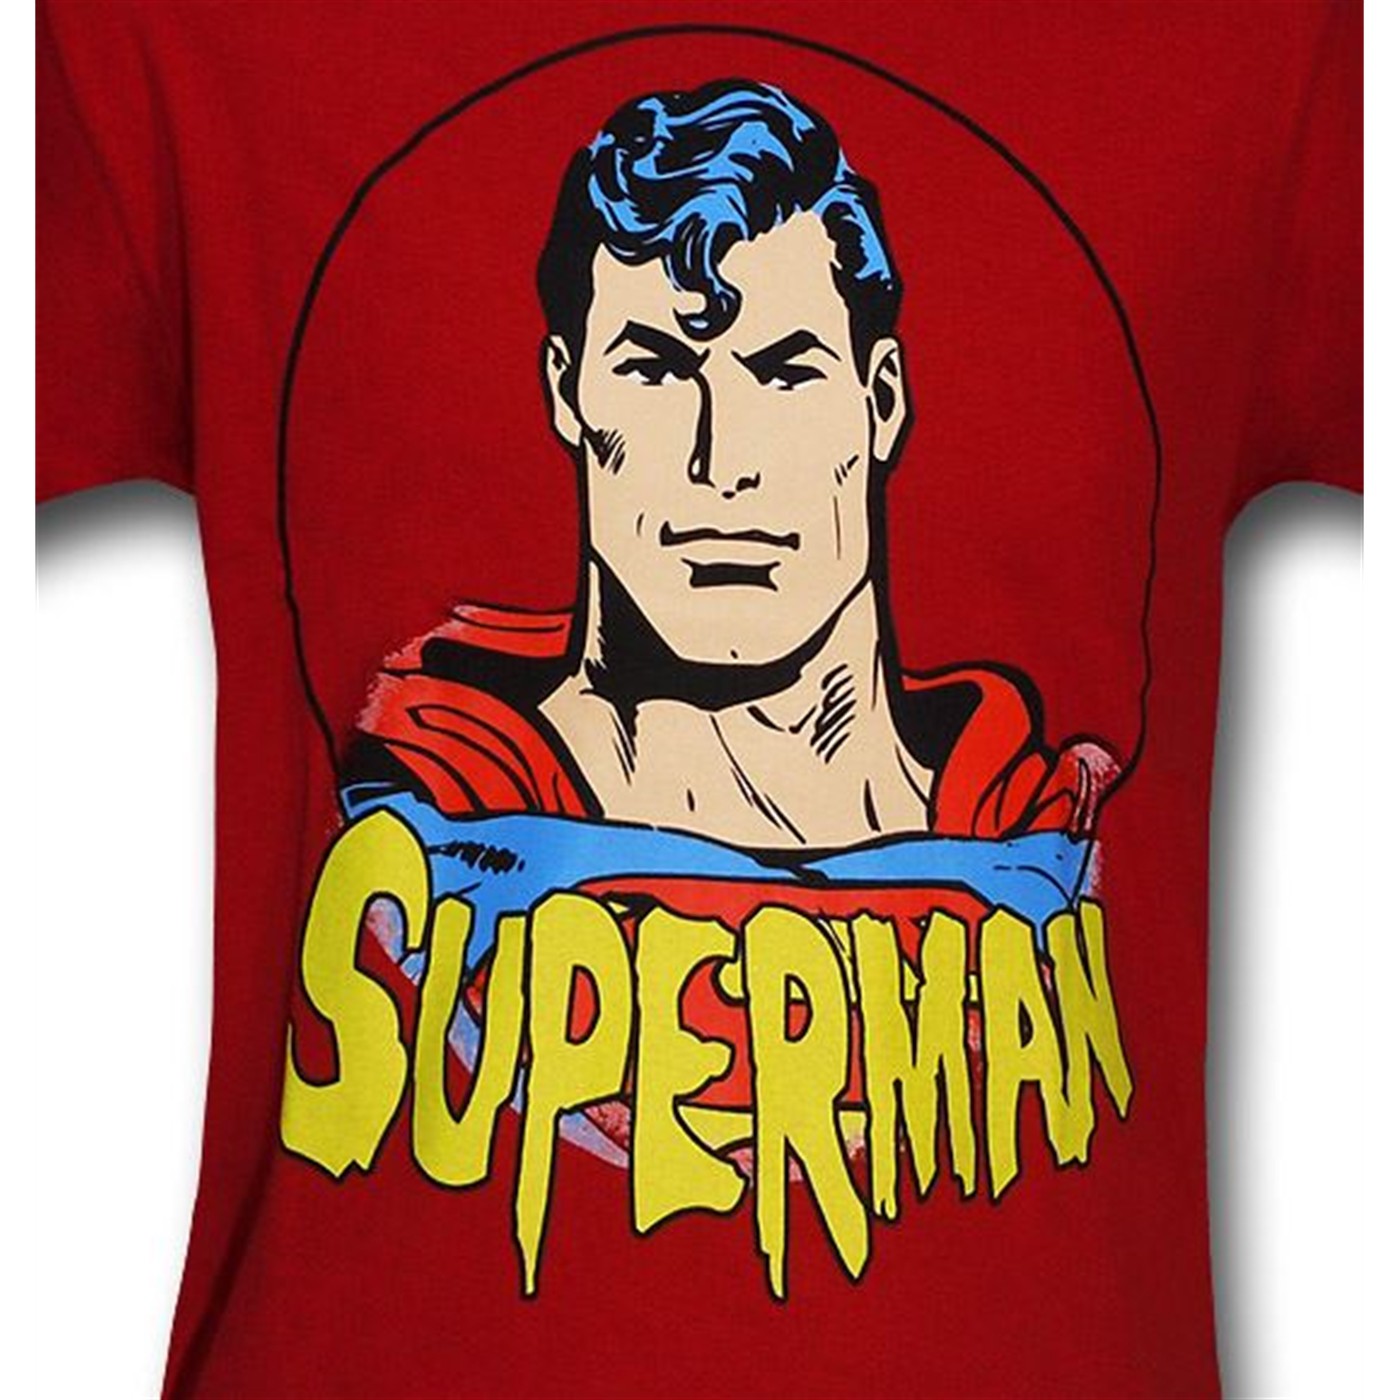 Superman Steel Visage Kids T-Shirt